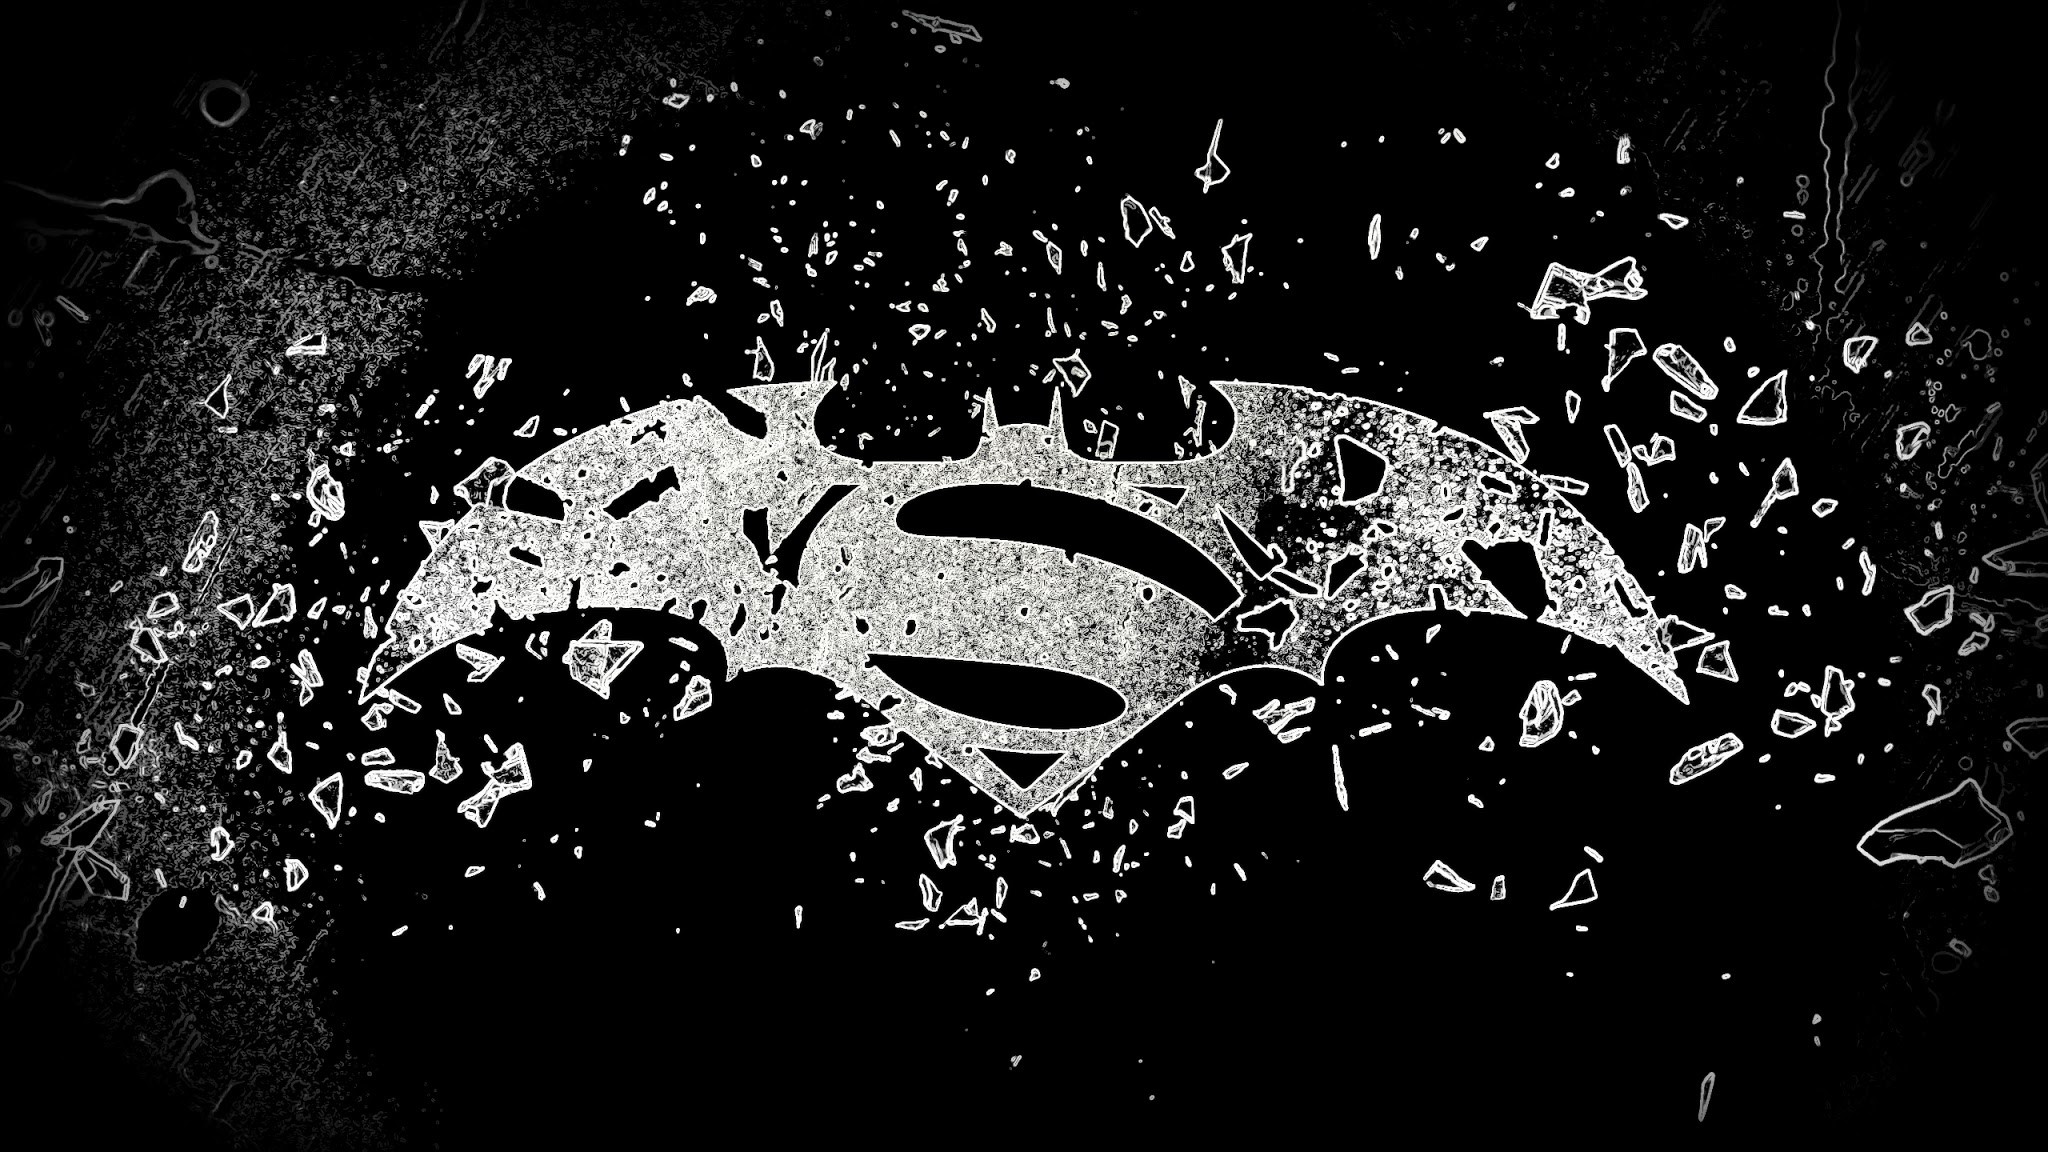 Batman v superman dawn of justice wallpapers my free wallpapers hub